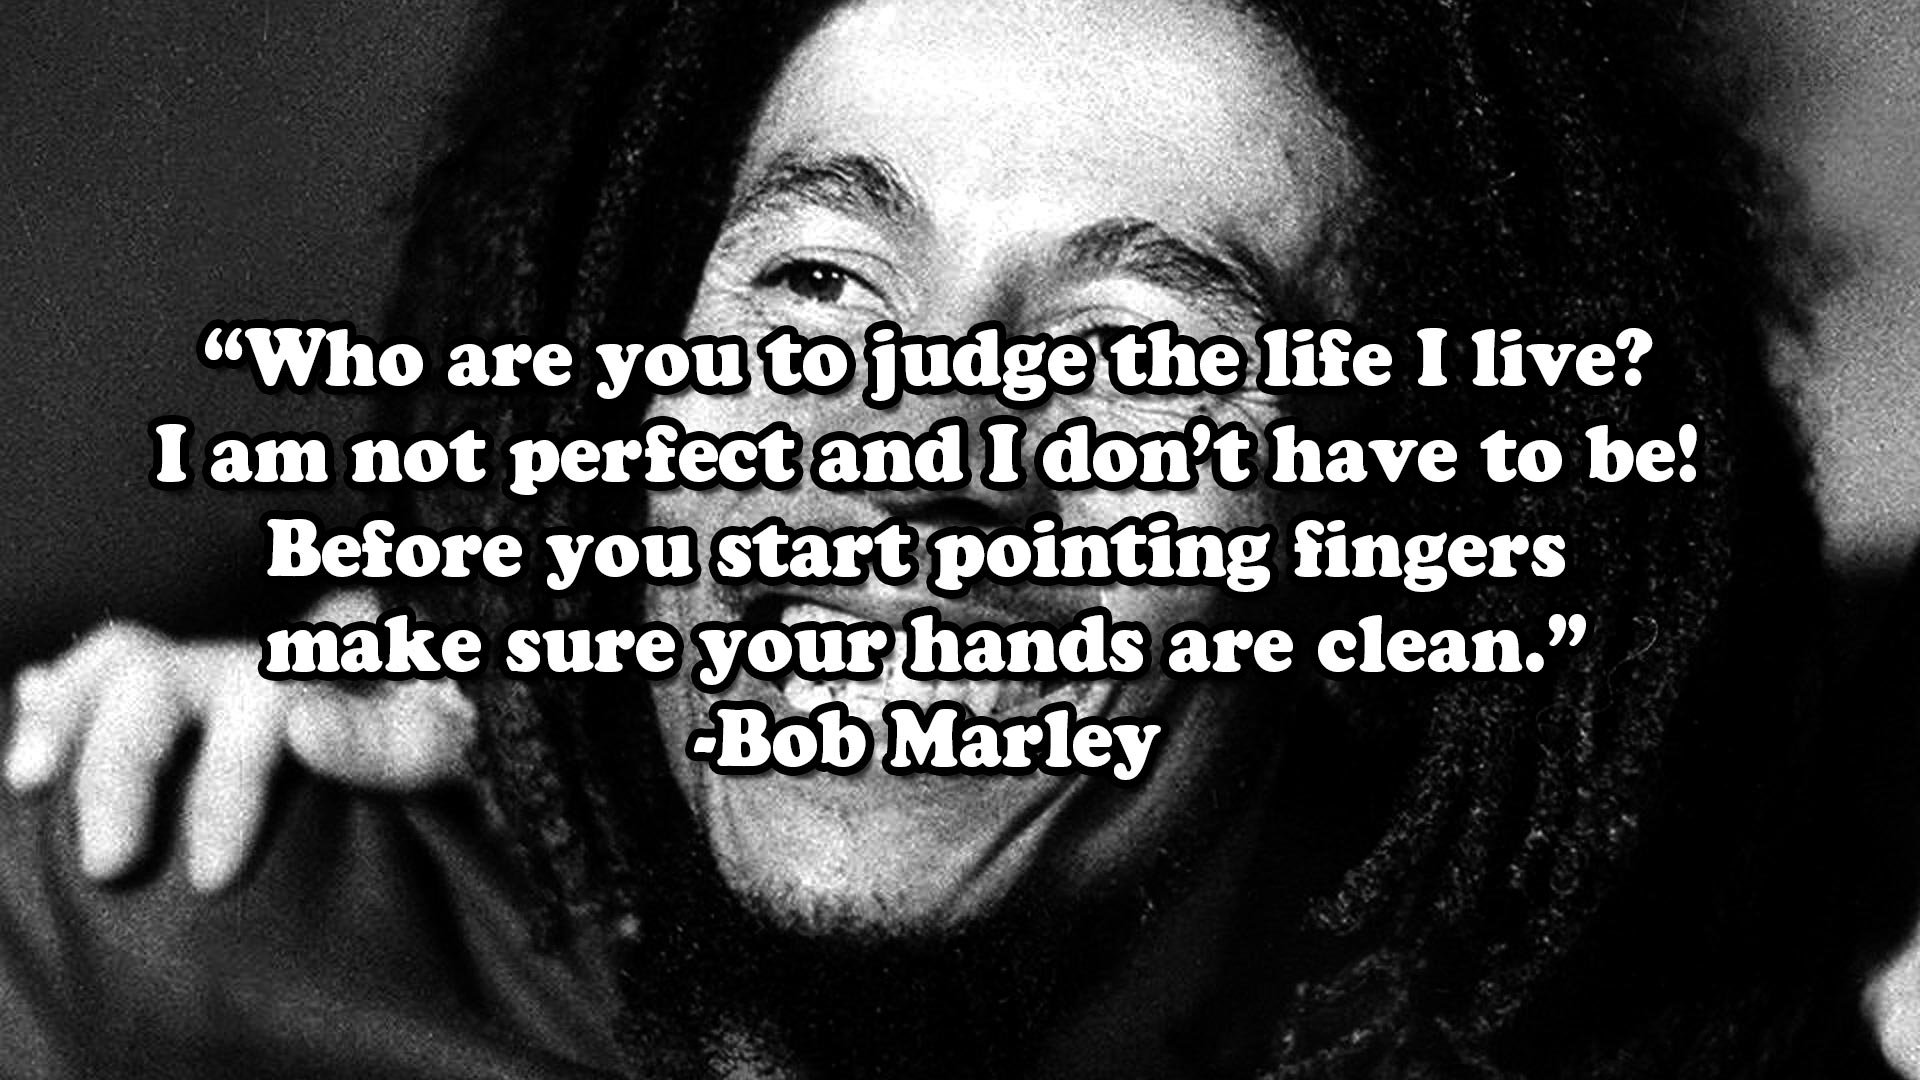 Bob marley reggae singer marijuana quote sadic mood anarchy wallpapers hd desktop and mobile backgrounds